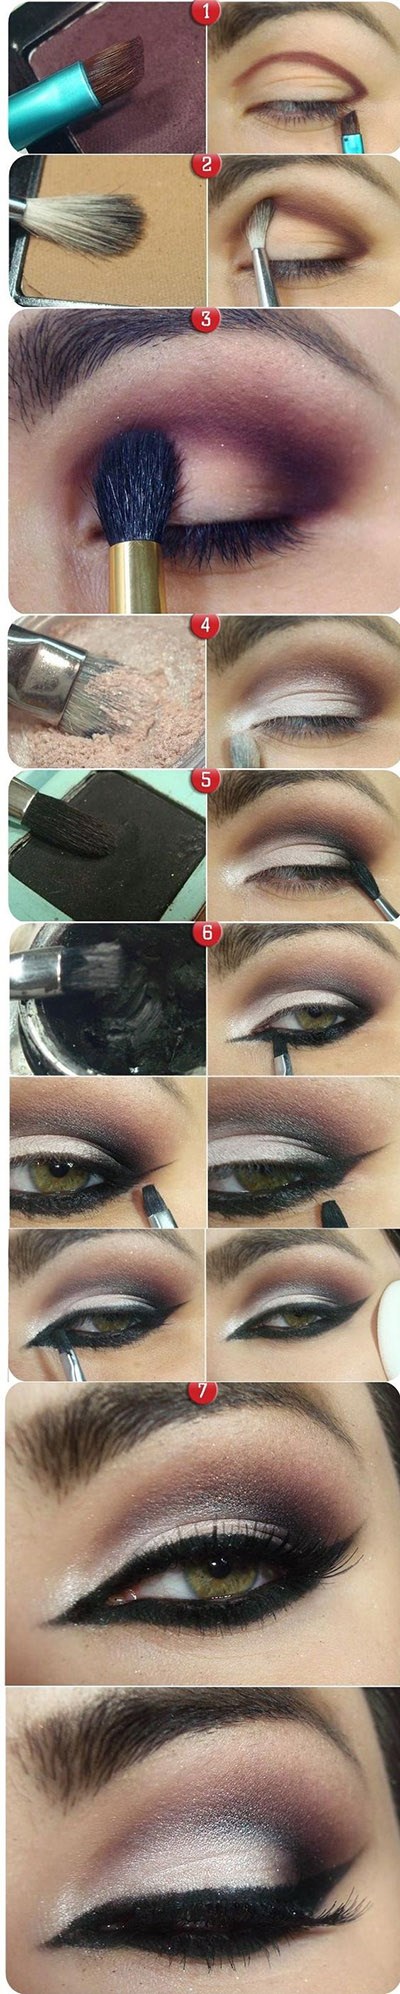 egyptian-makeup-tutorial-08_16 Egyptische make-up tutorial